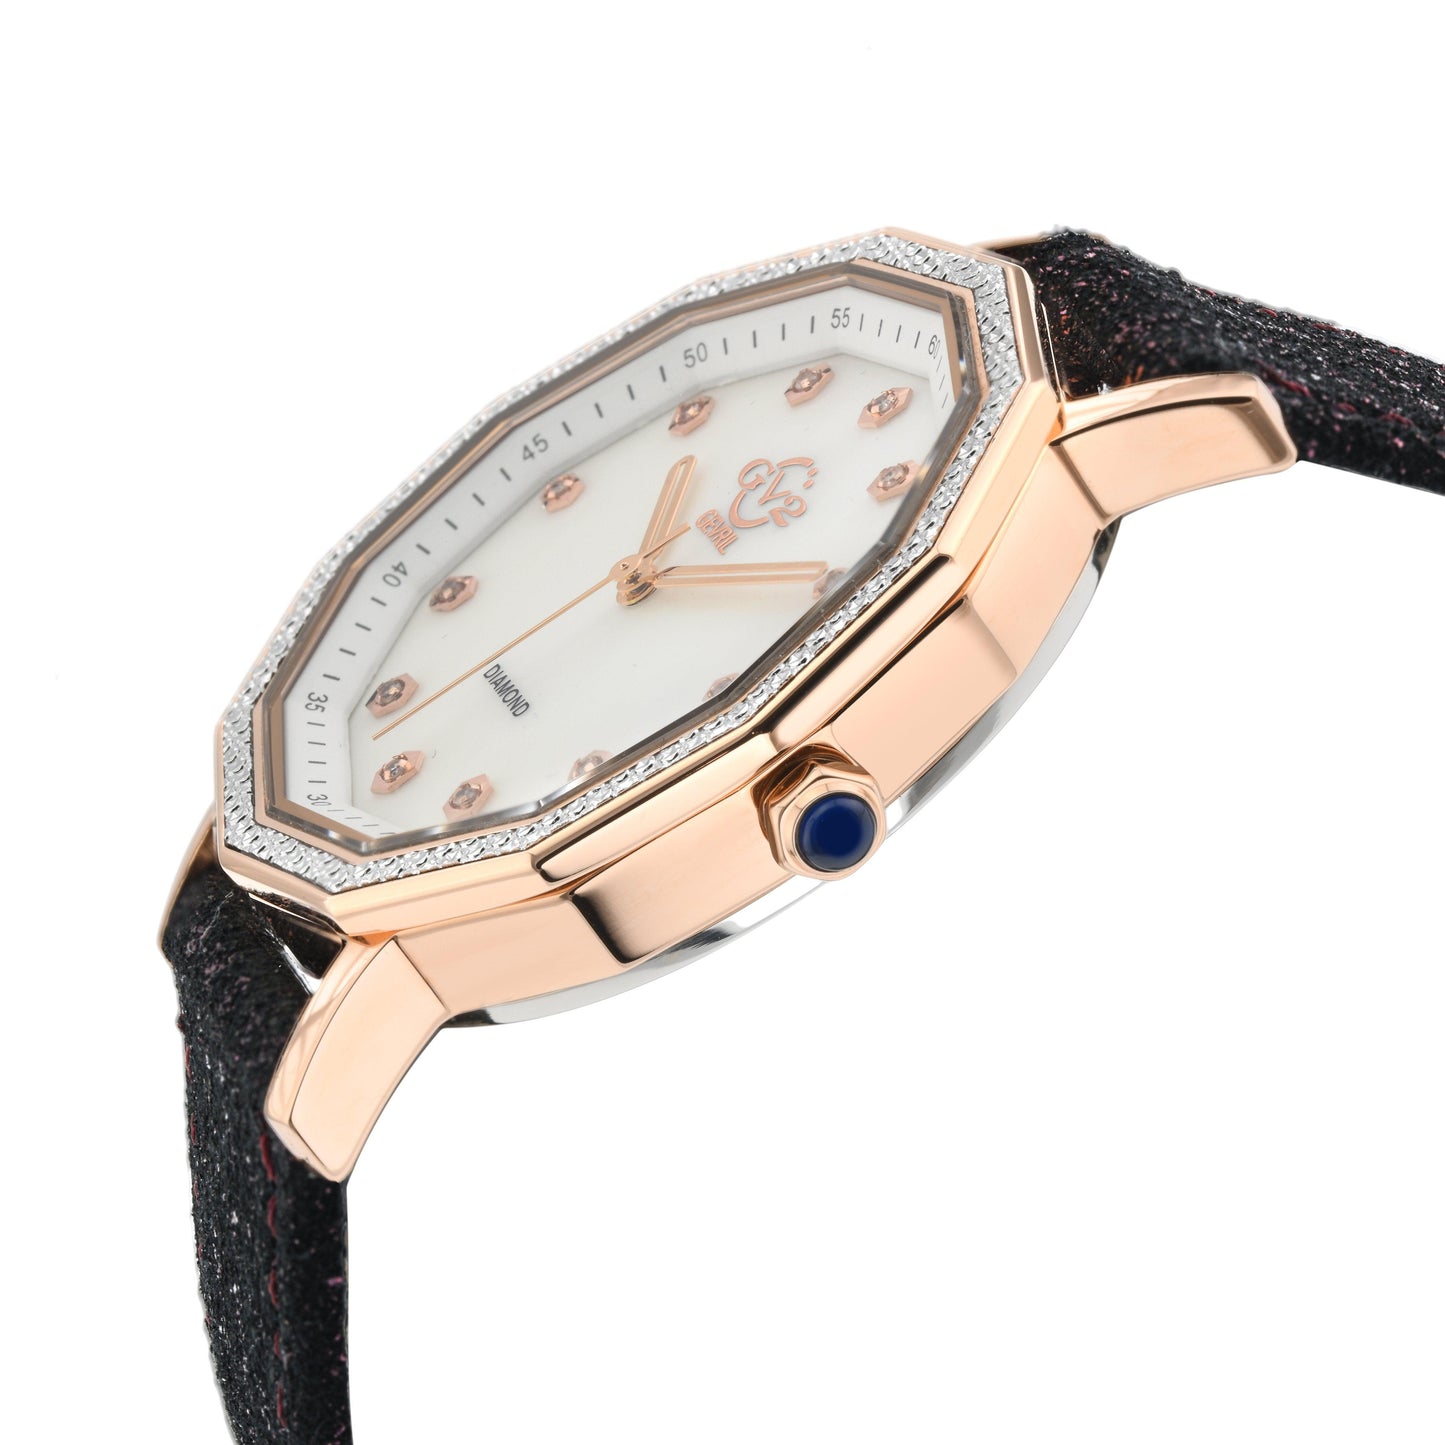 Gevril-Luxury-Swiss-Watches-GV2 Spello Diamond-14504